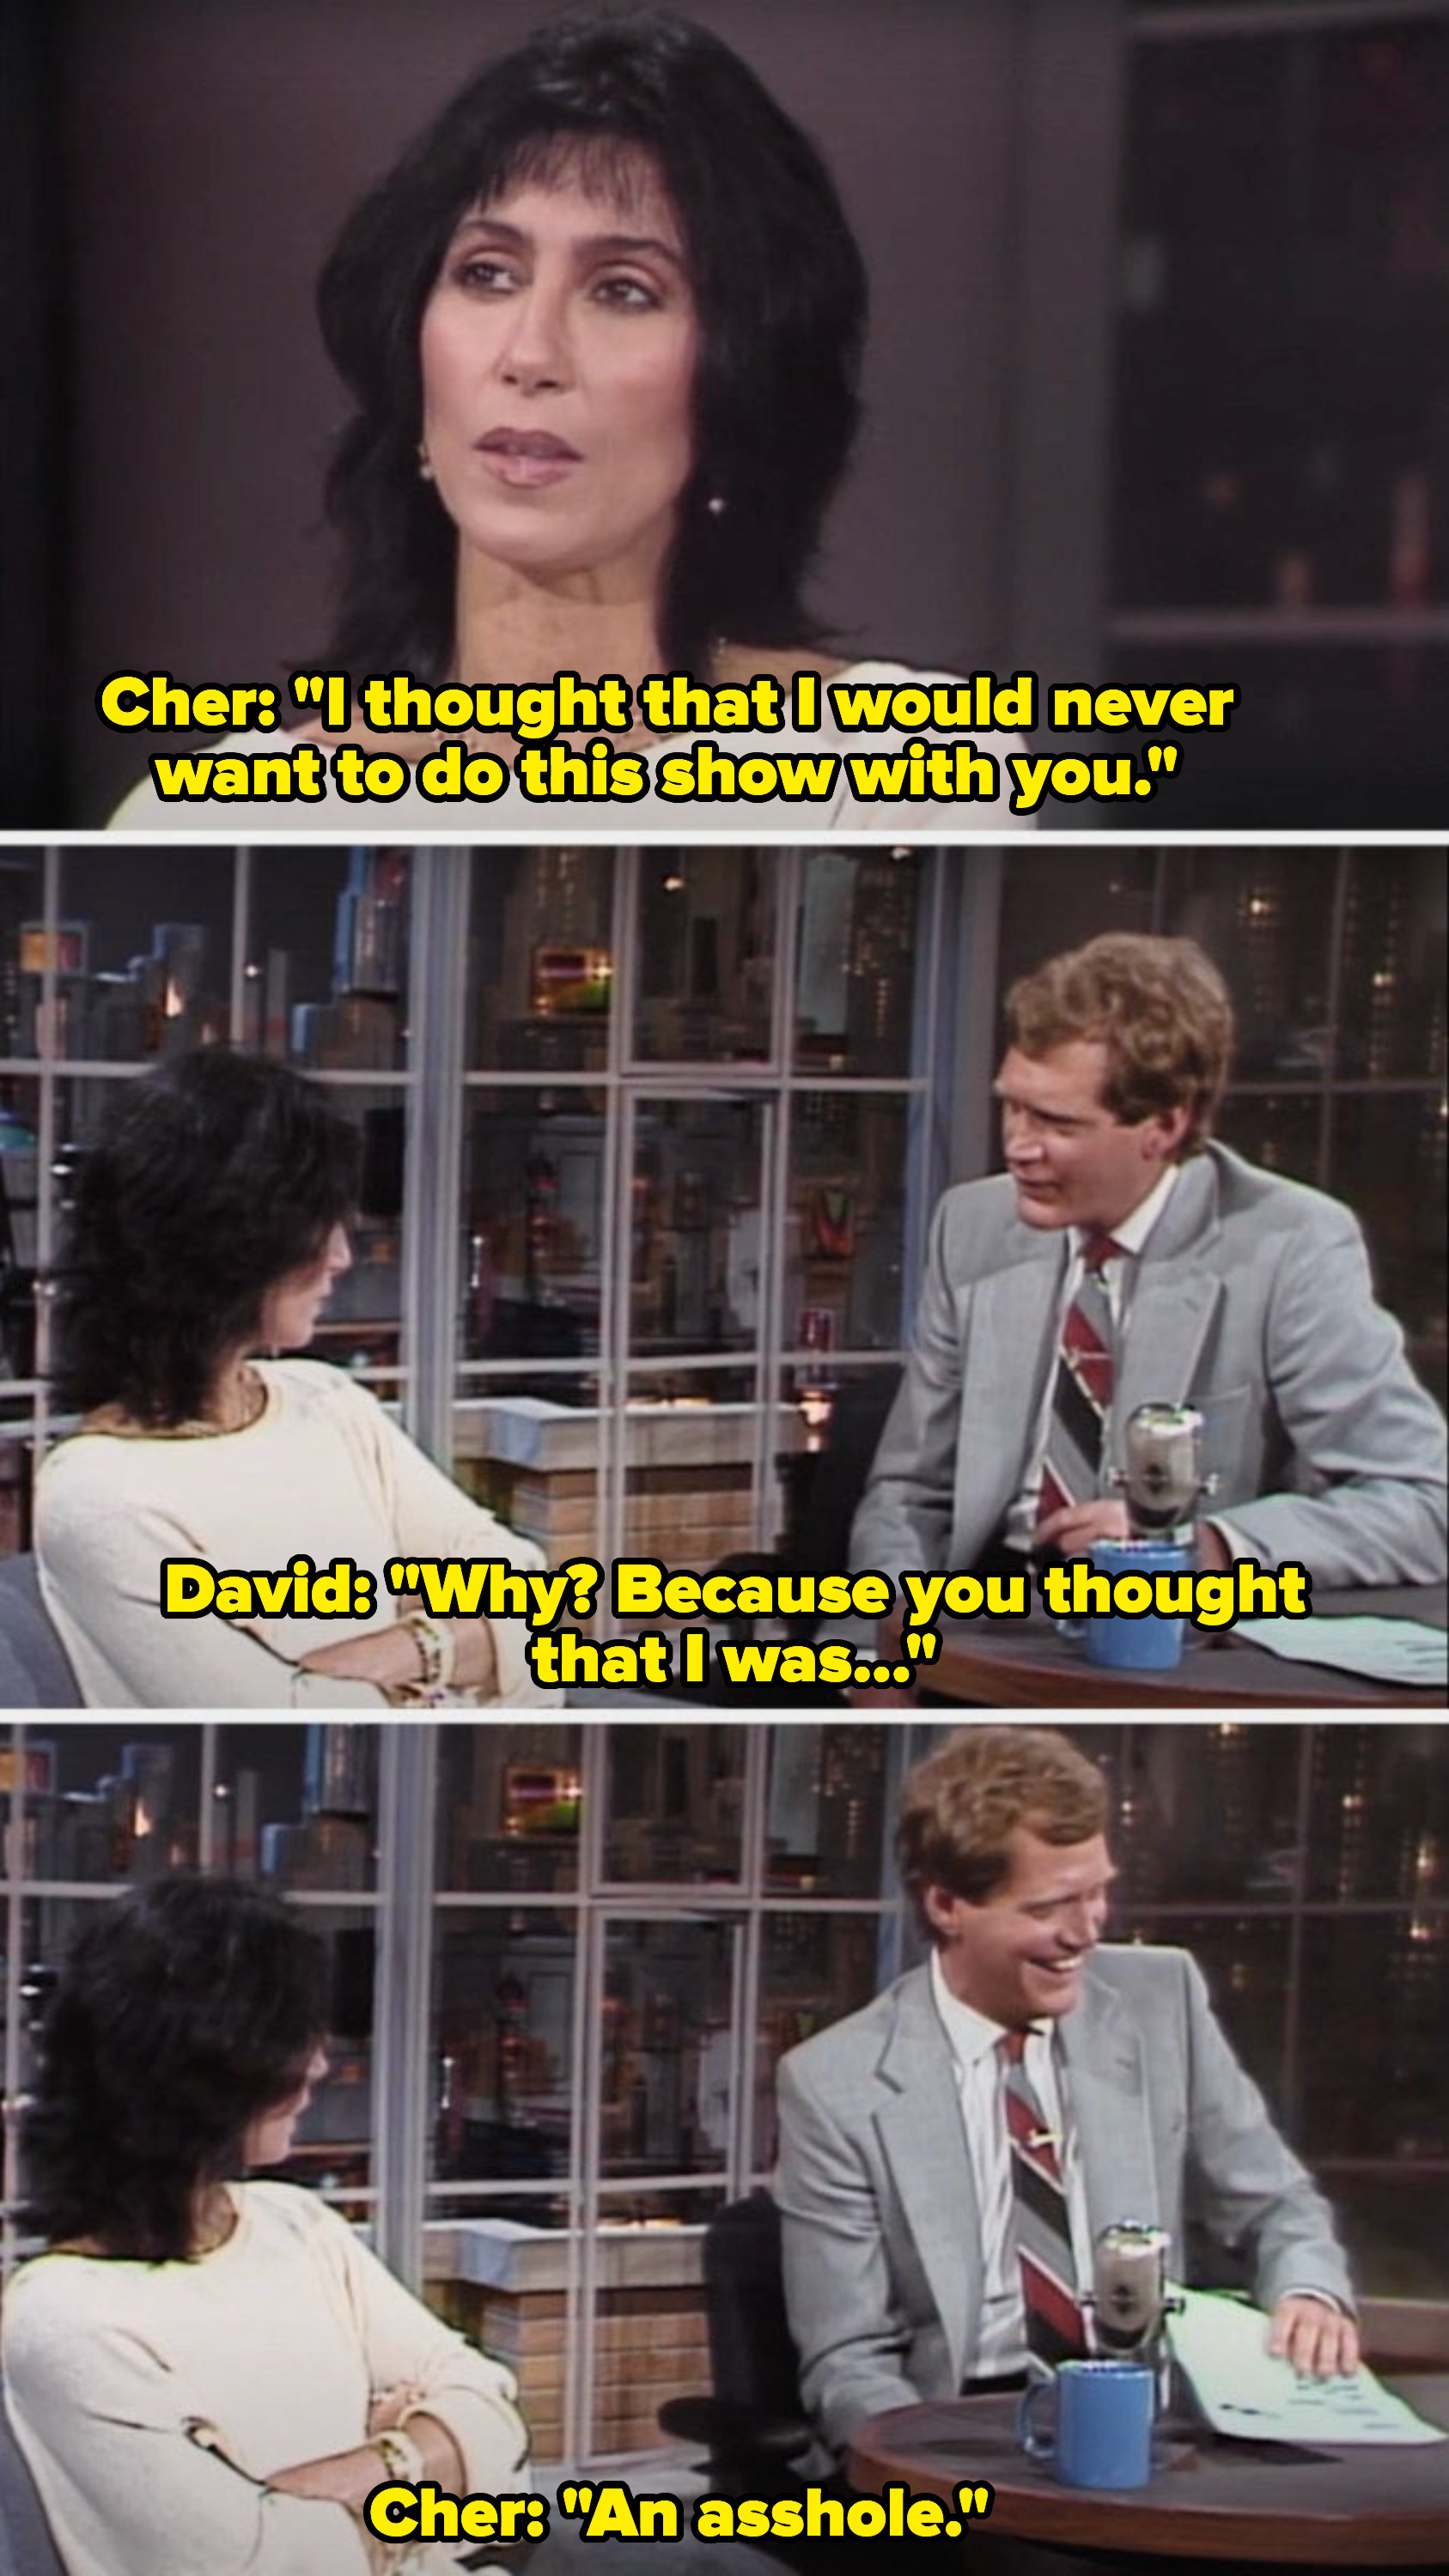 Cher calls David Letterman an asshole